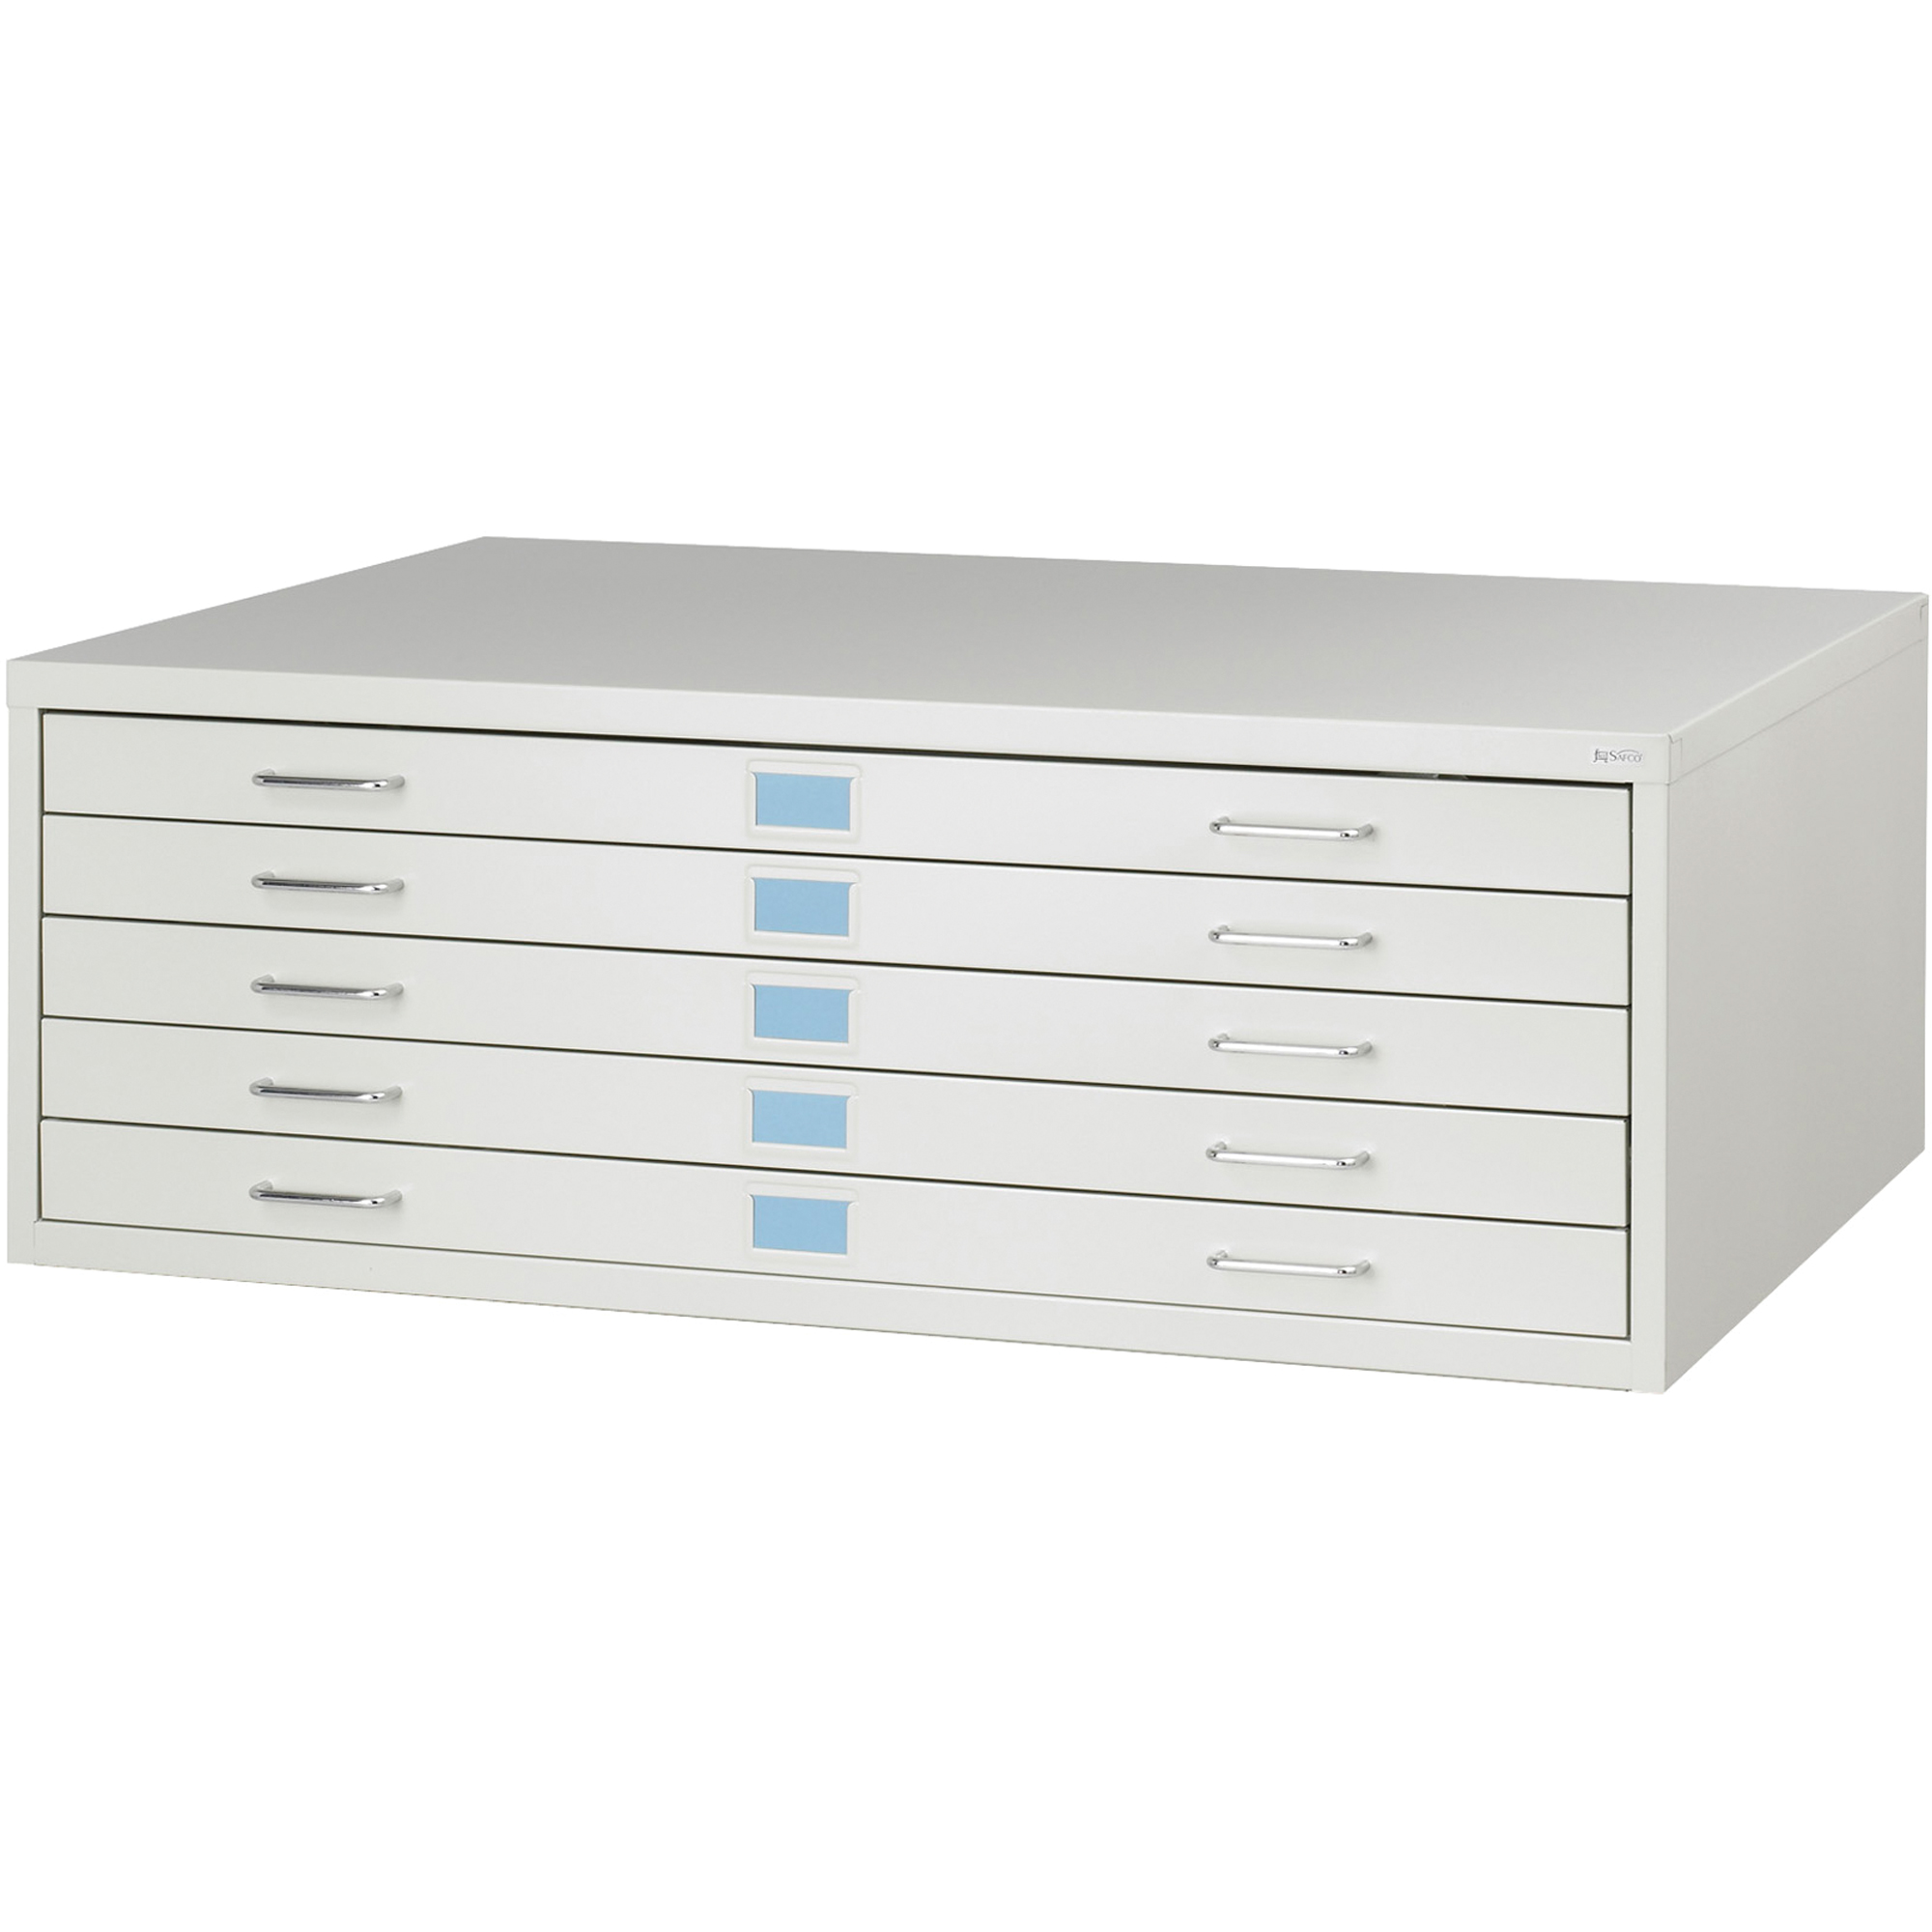 Safco Faciltm Flat File Cabinets Oj918 4972lg Shop Plan File